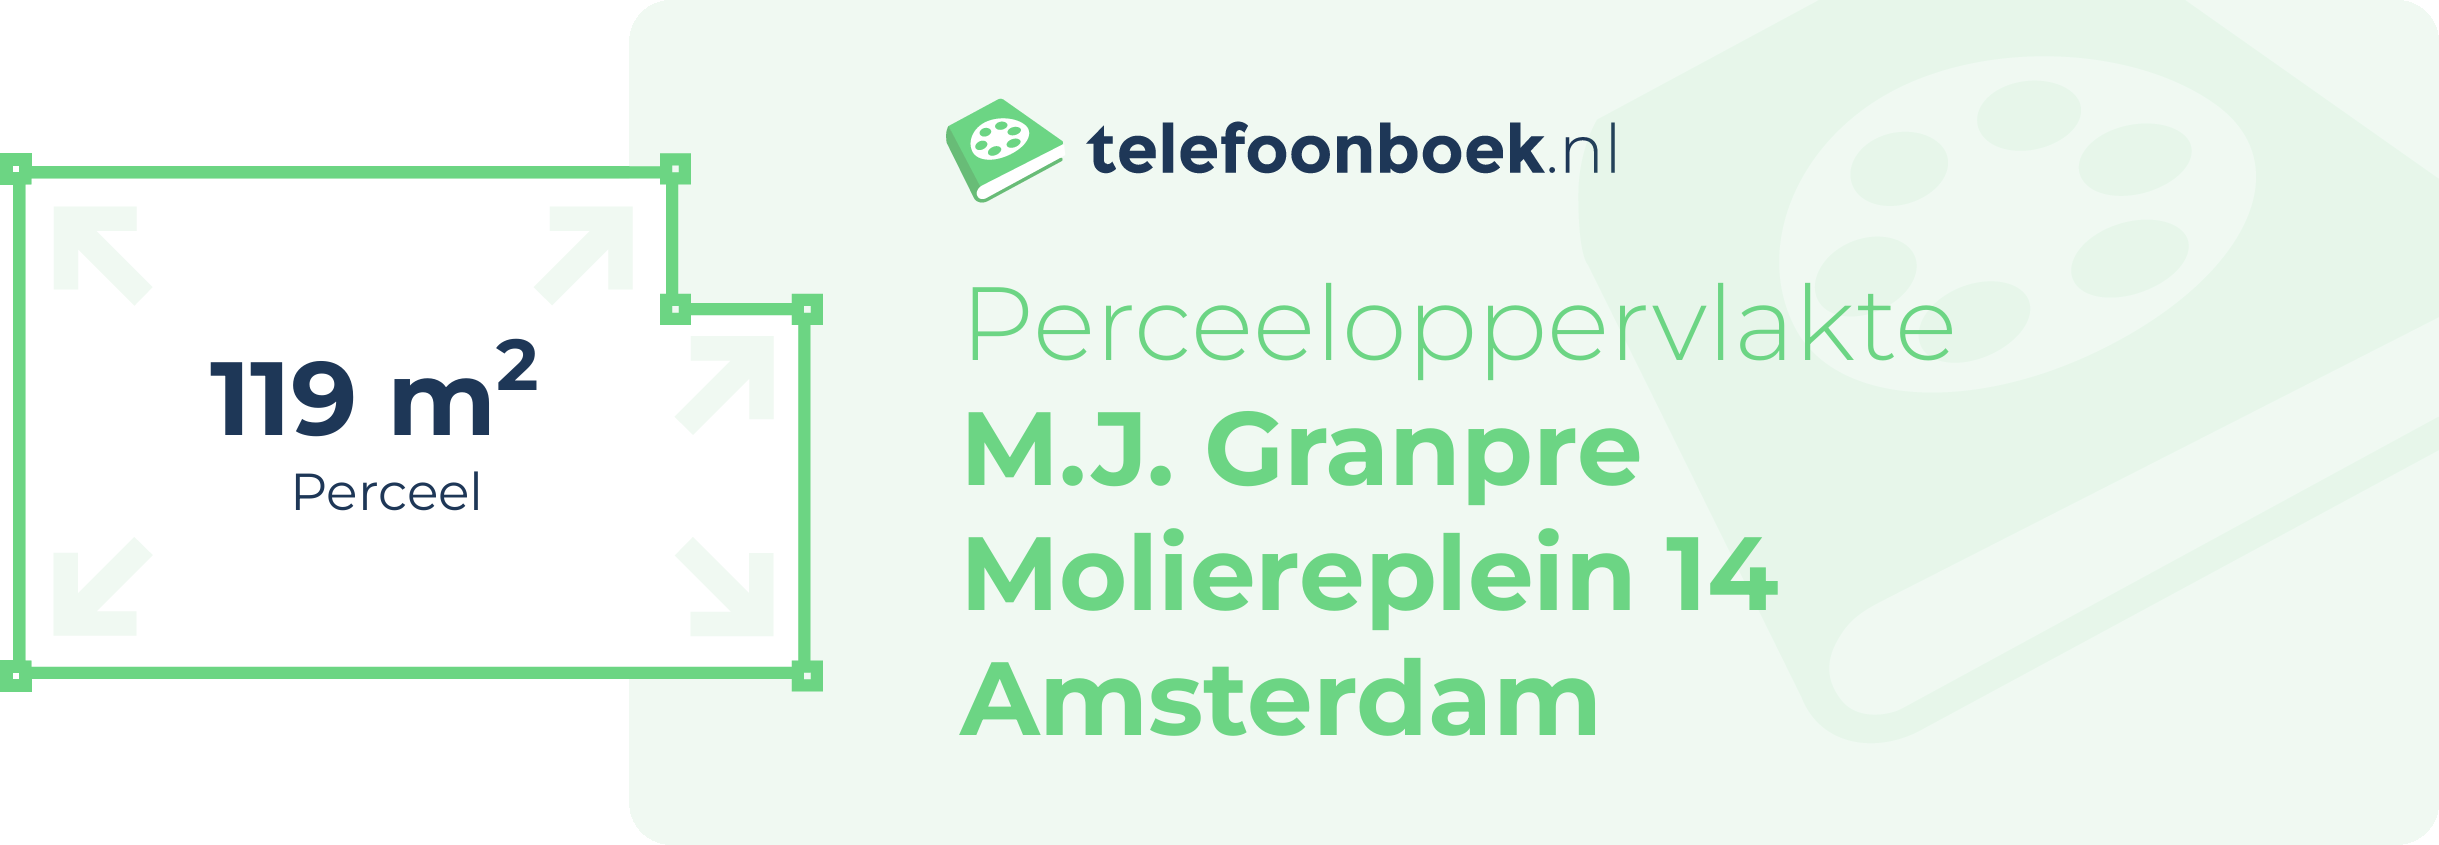 Perceeloppervlakte M.J. Granpre Moliereplein 14 Amsterdam